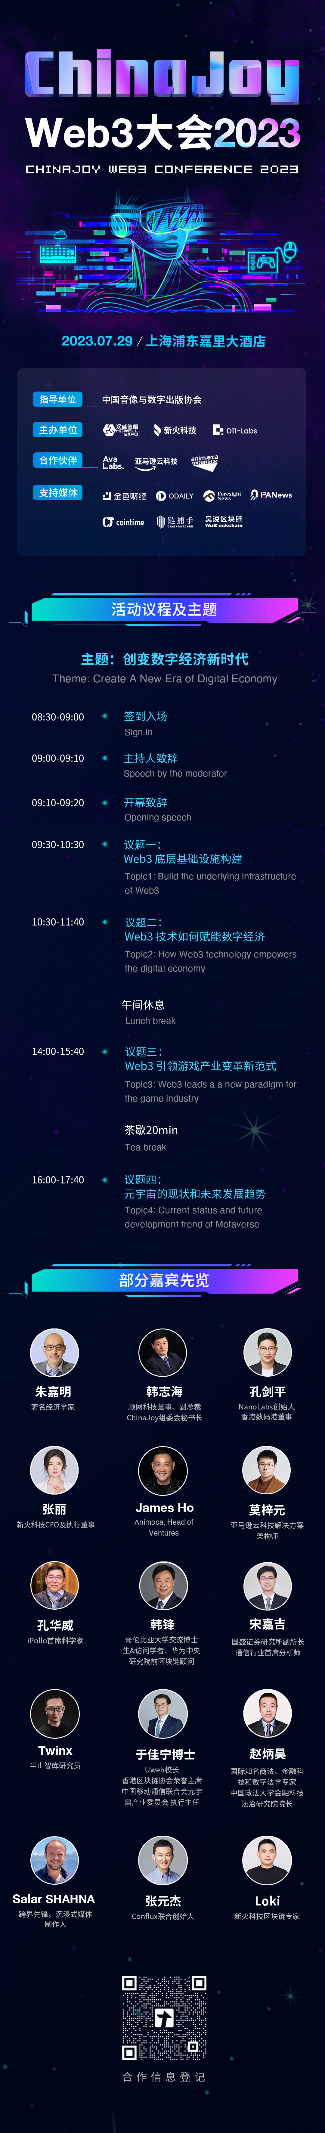 ChinaJoy Web3大会2023：创变数字经济新时代